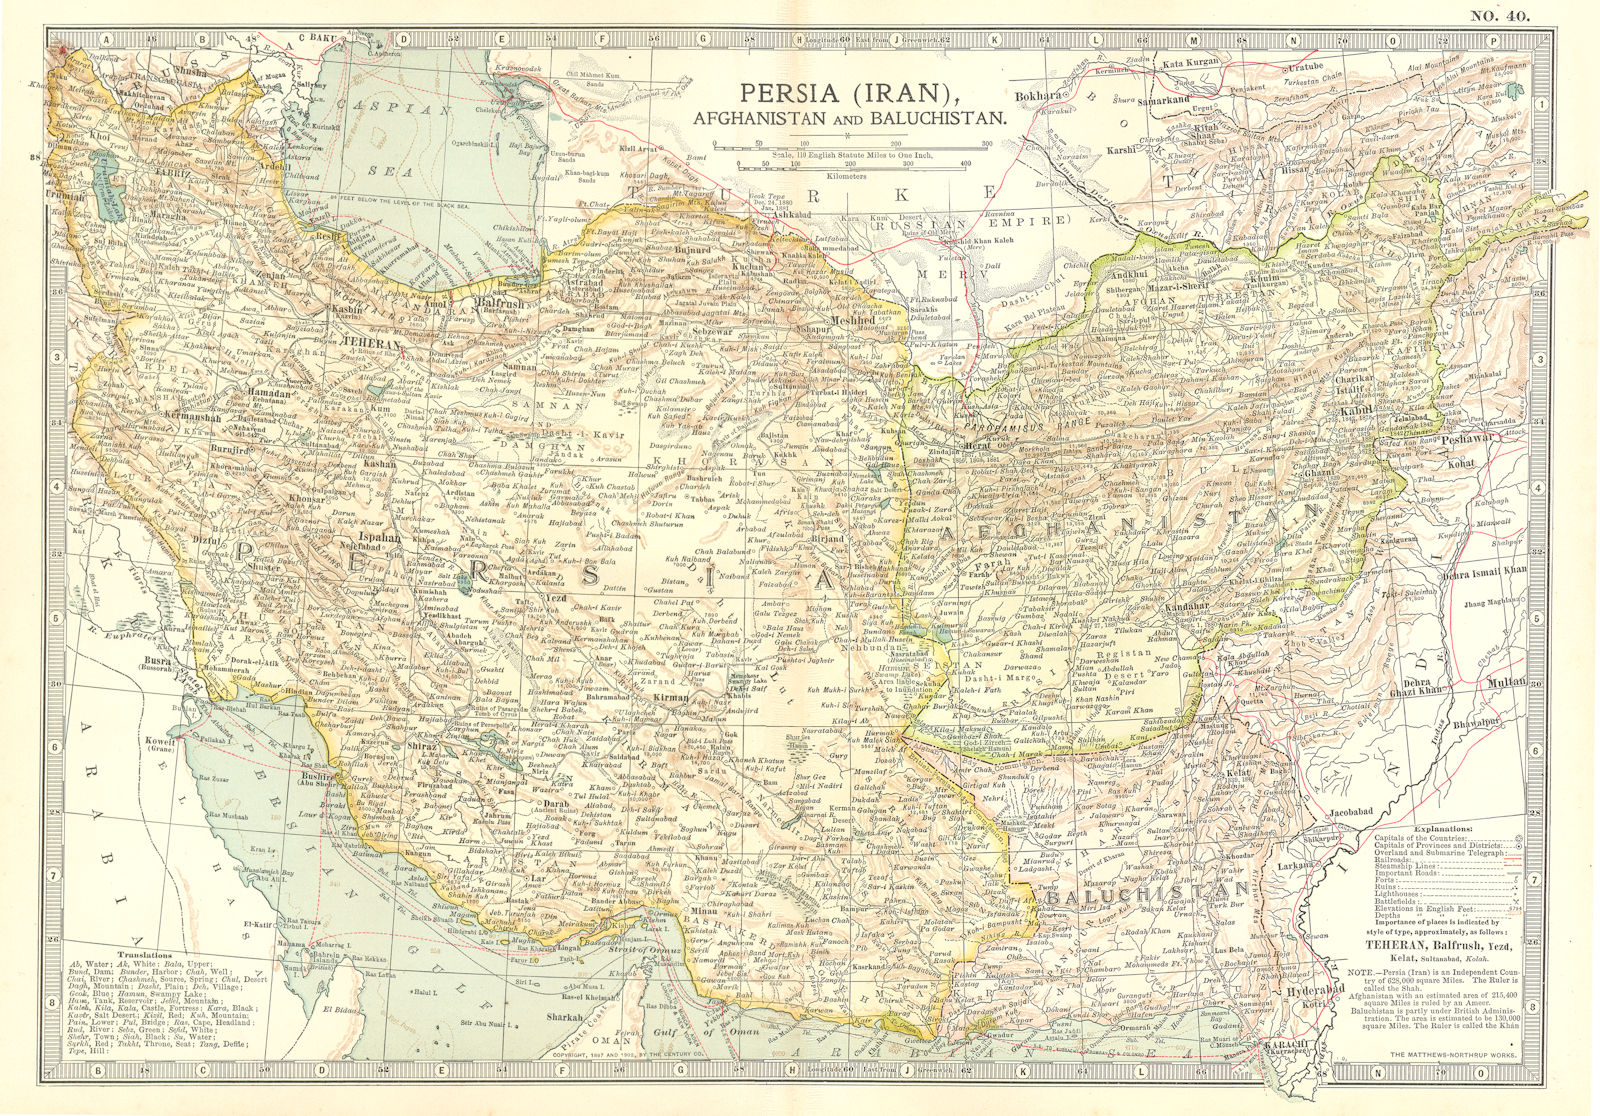 Associate Product IRAN. Persia Afghanistan & Baluchistan Pakistan 1903 old antique map chart